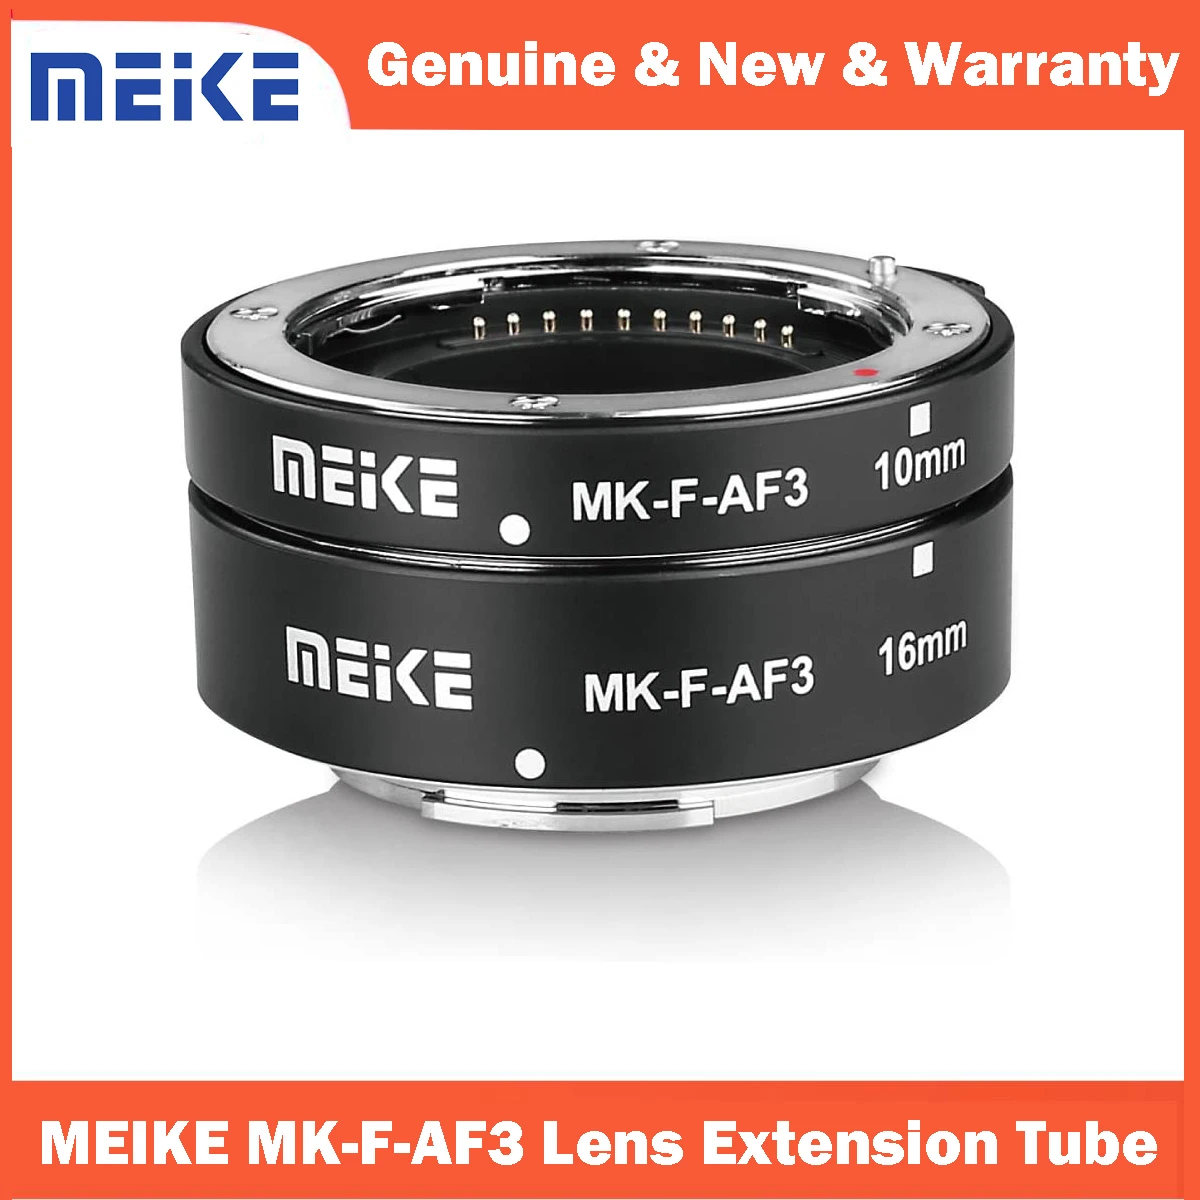 

MEIKE MK-F-AF3 Auto Fucus Macro Extension Tube for Fujifilm Mirrorless Camera X-T1 X-T2 X-Pro1 X-Pro2 X-T10 X-A1 X-E1 X-E2 X-E3